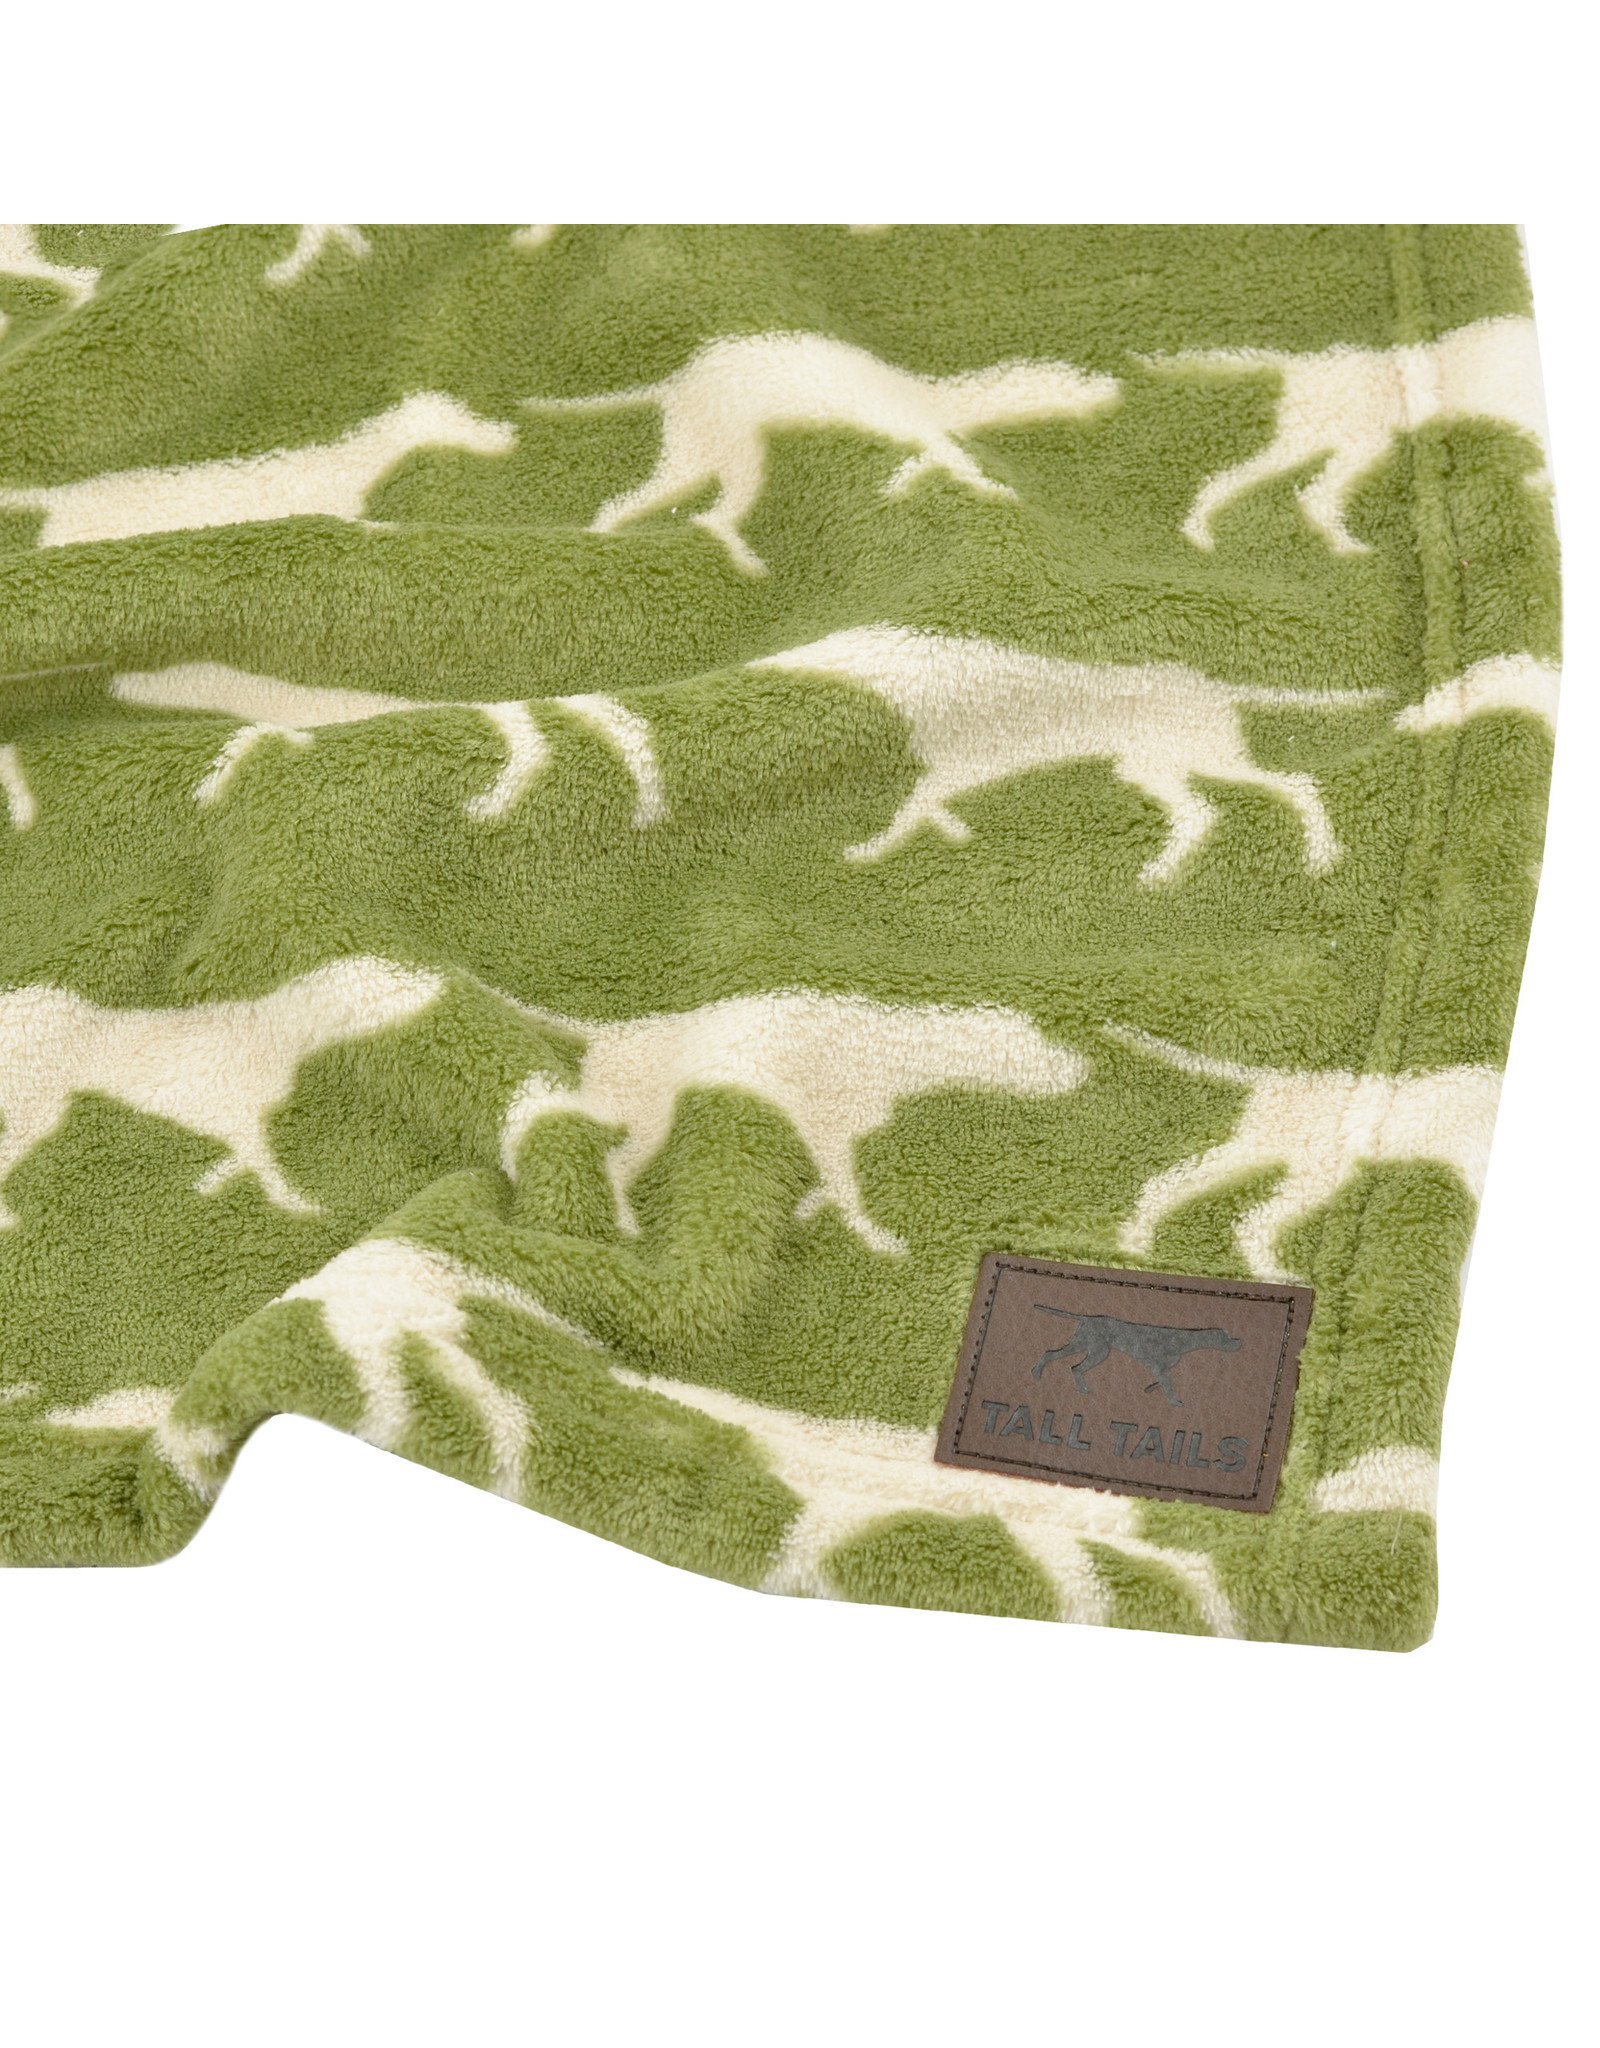 Tall Tails Fleece Dog Blanket, 30x40, sage icon